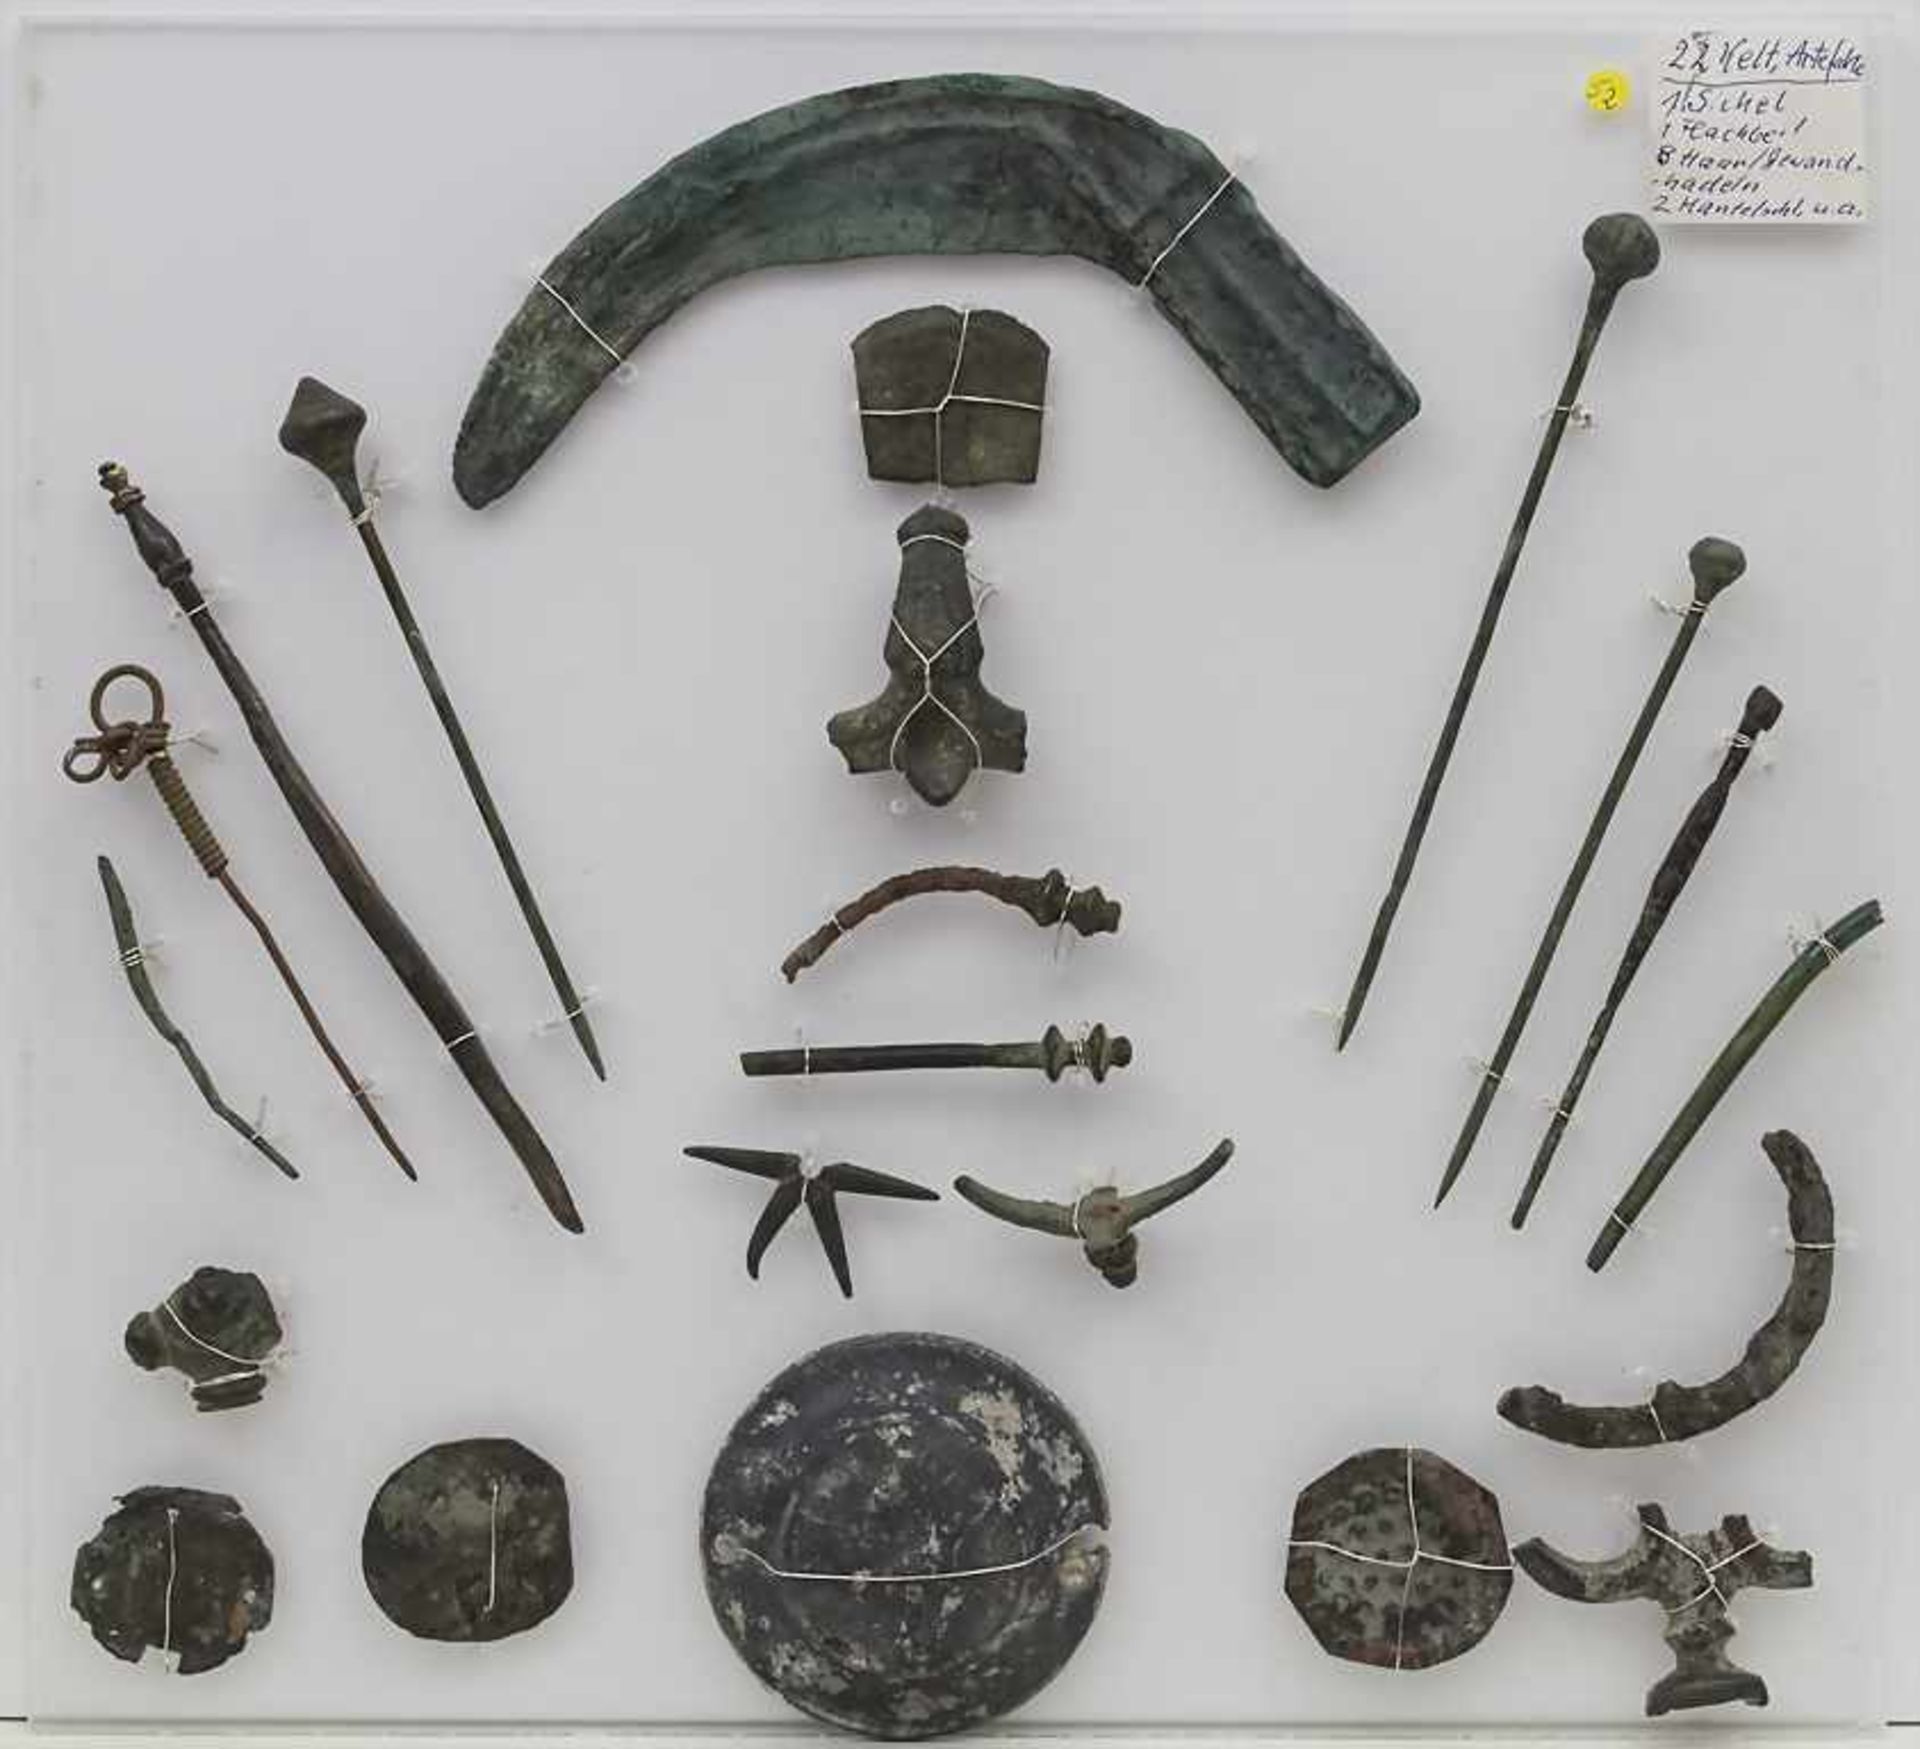 Lot 22 keltische Artefakte / 22 Celtic artefacts Sichel, Flachbeil, Haar- und Gewandnadeln u.a.,